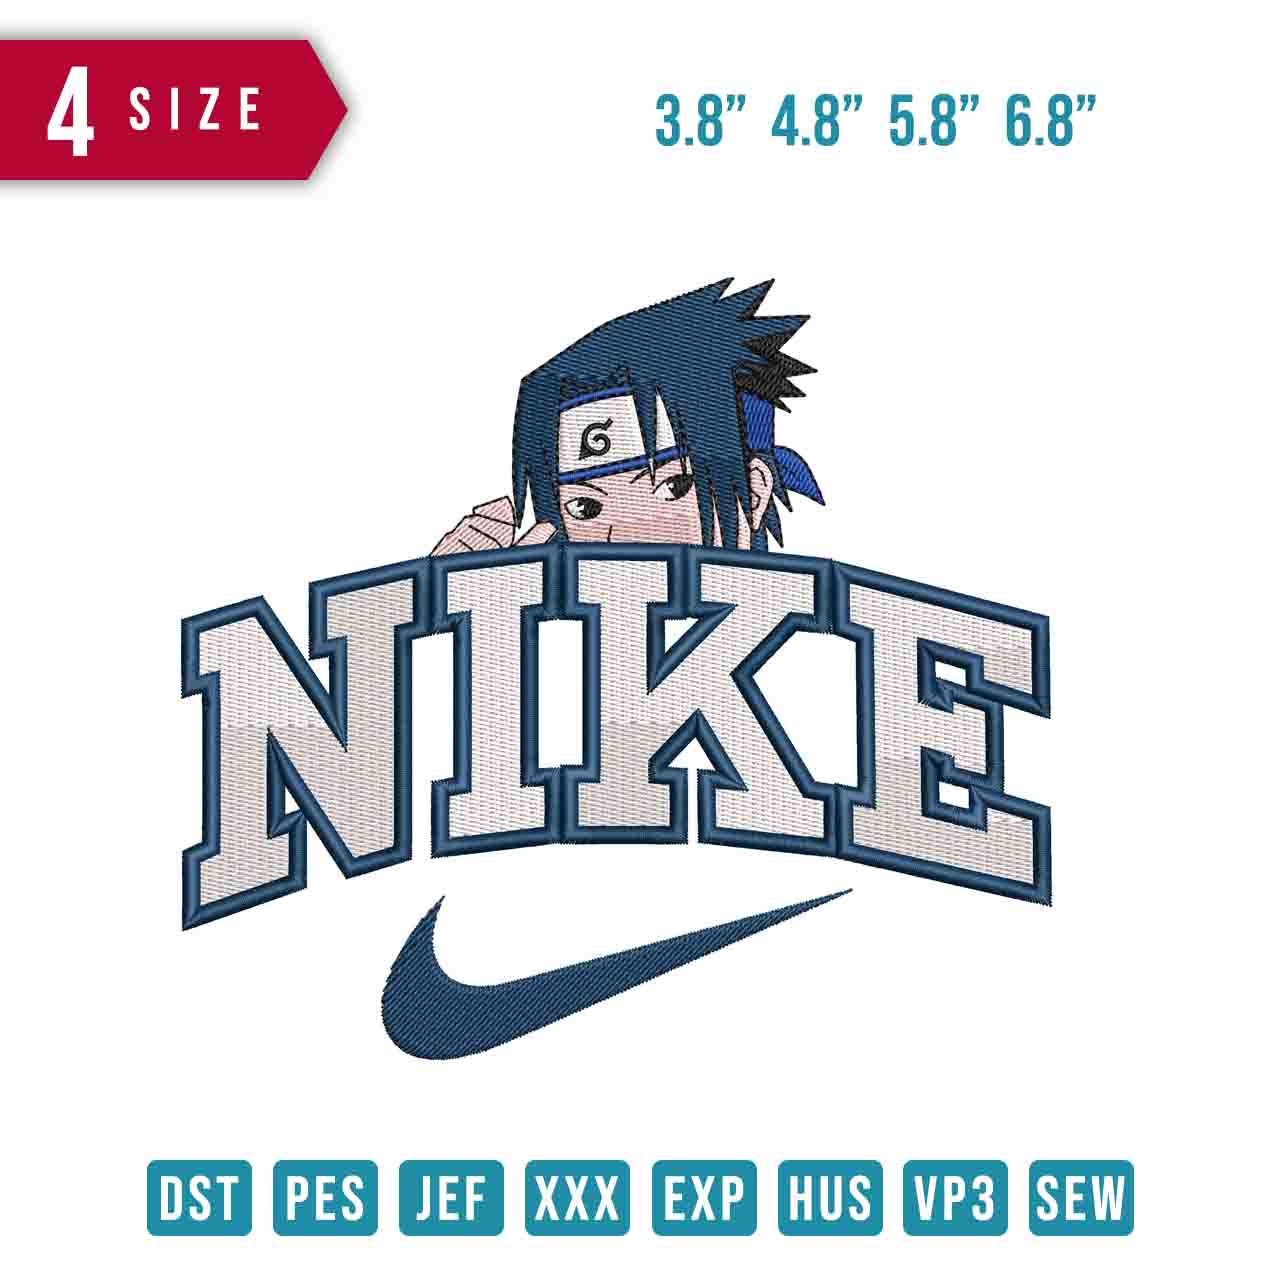 Nike Sasuke on top